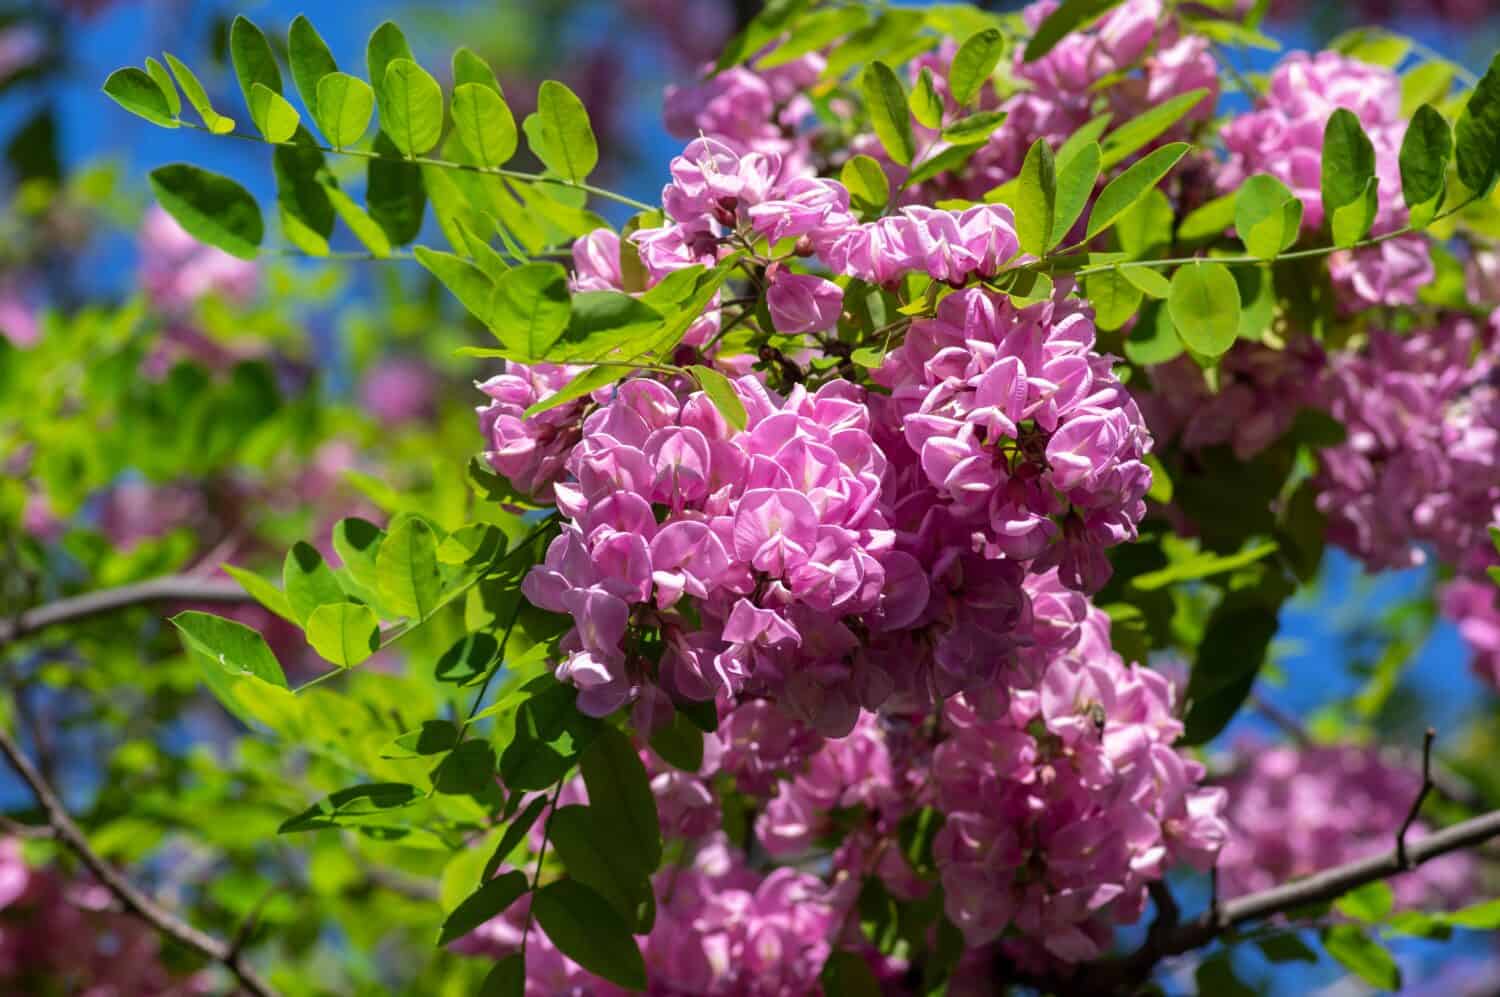 Robinia pseudoacacia ornamental tree in bloom, purple robe cultivation flowering bunch of flowers, green leaves in sunlight, blue sky